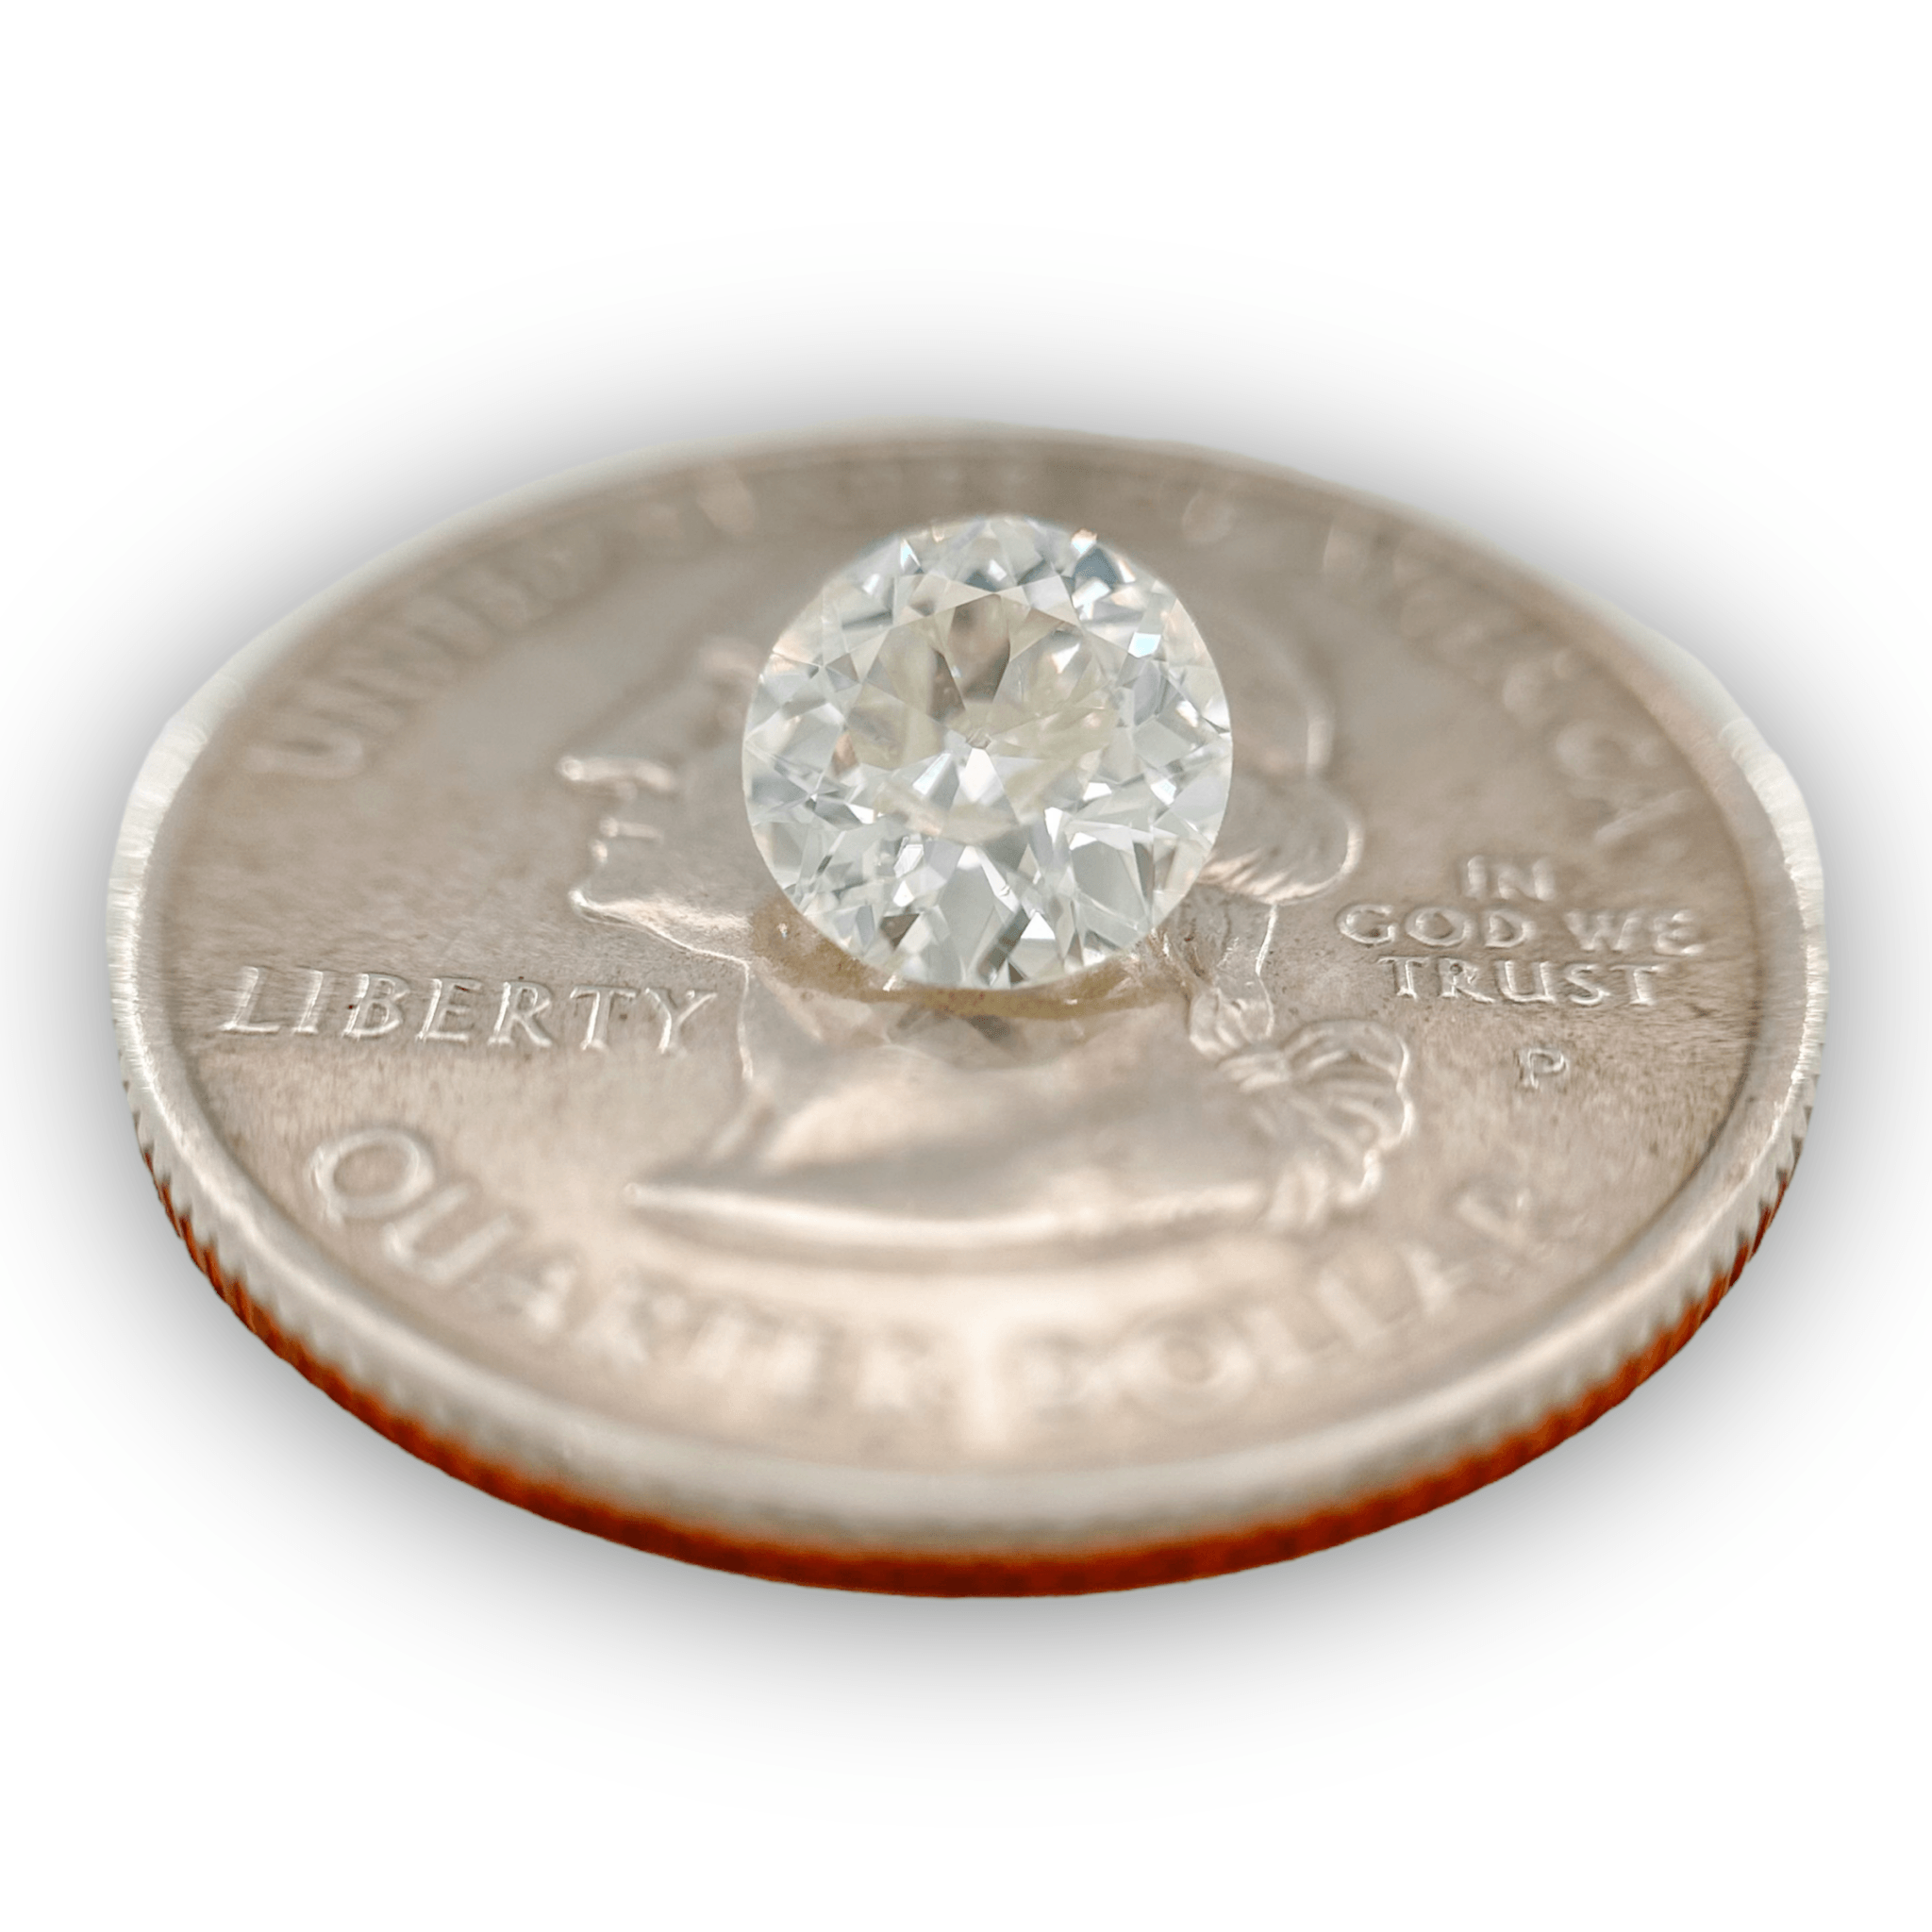 Estate 1.15ct H/SI2 OMC Loose Diamond